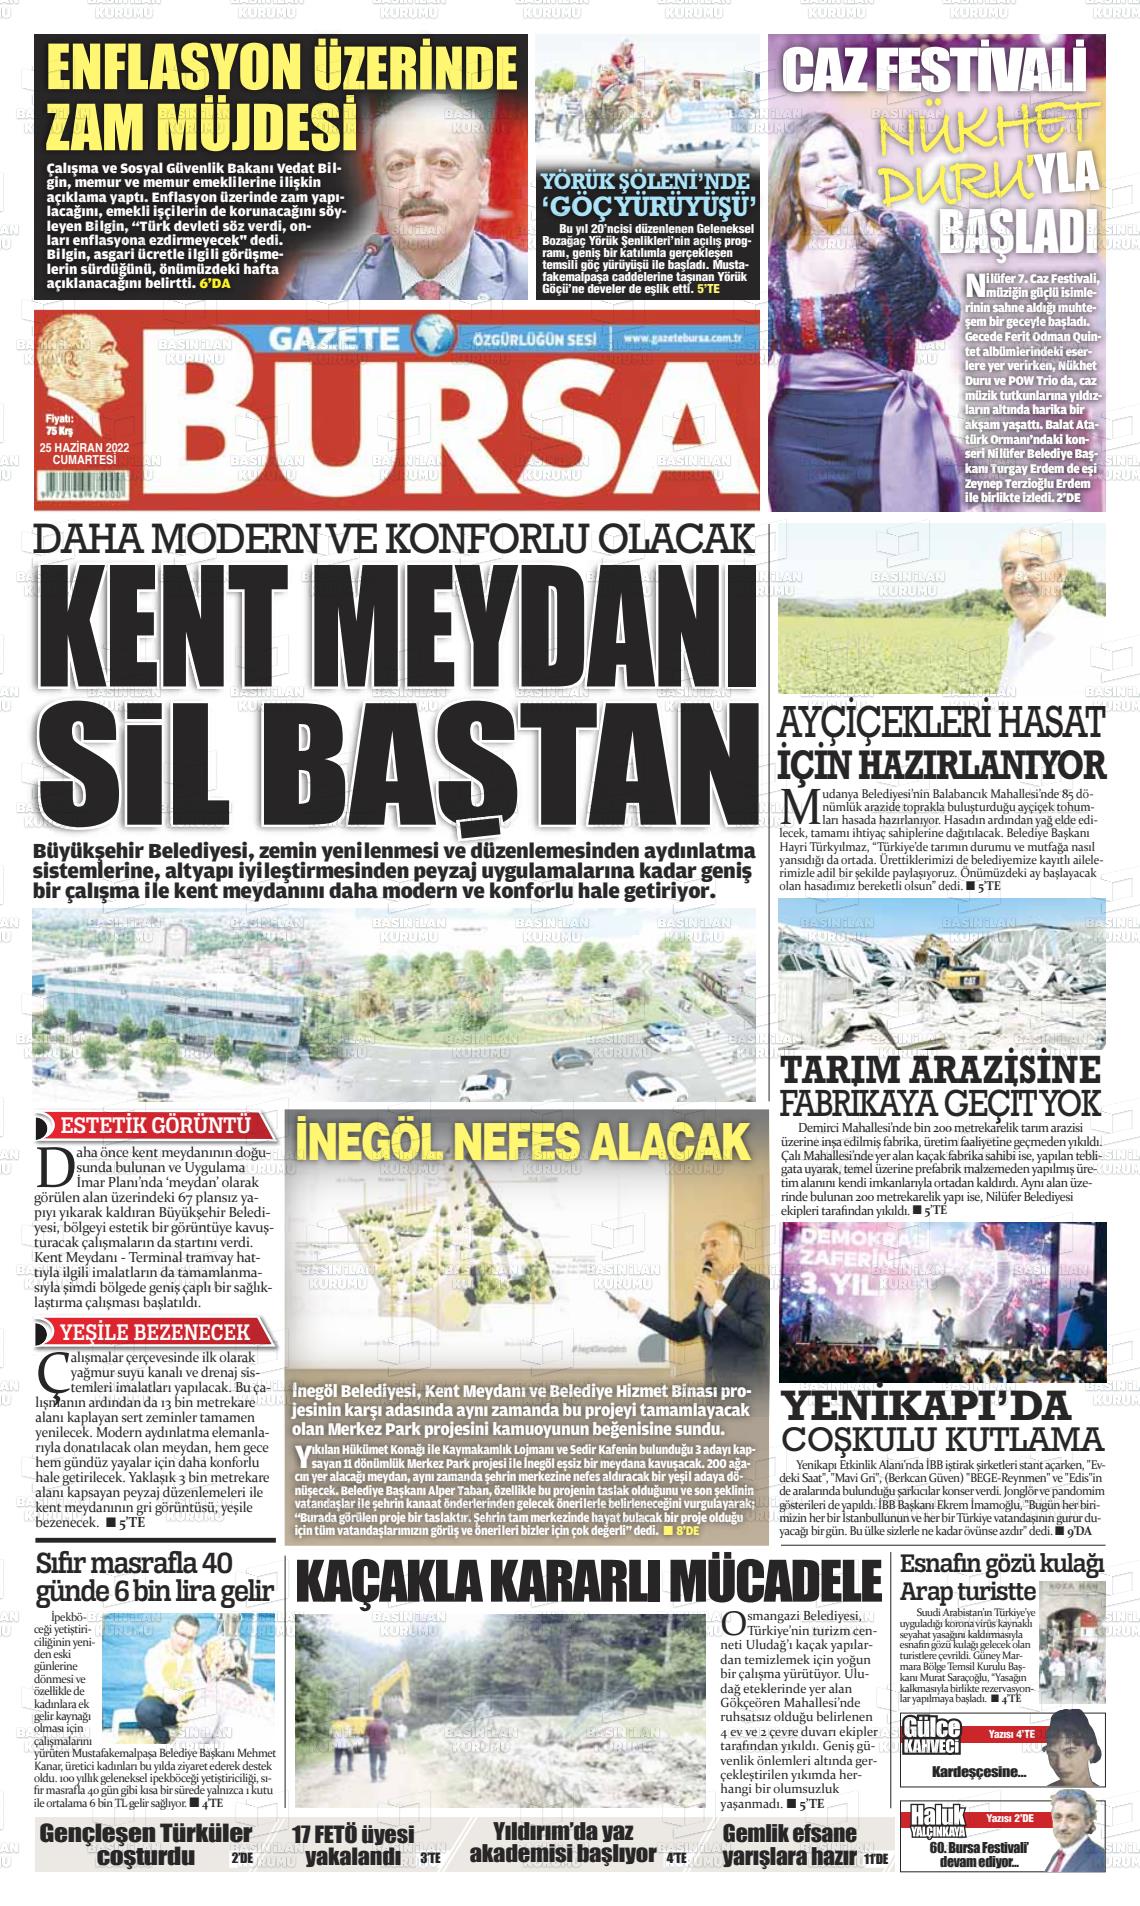 25 Haziran 2022 Gazete Bursa Gazete Manşeti